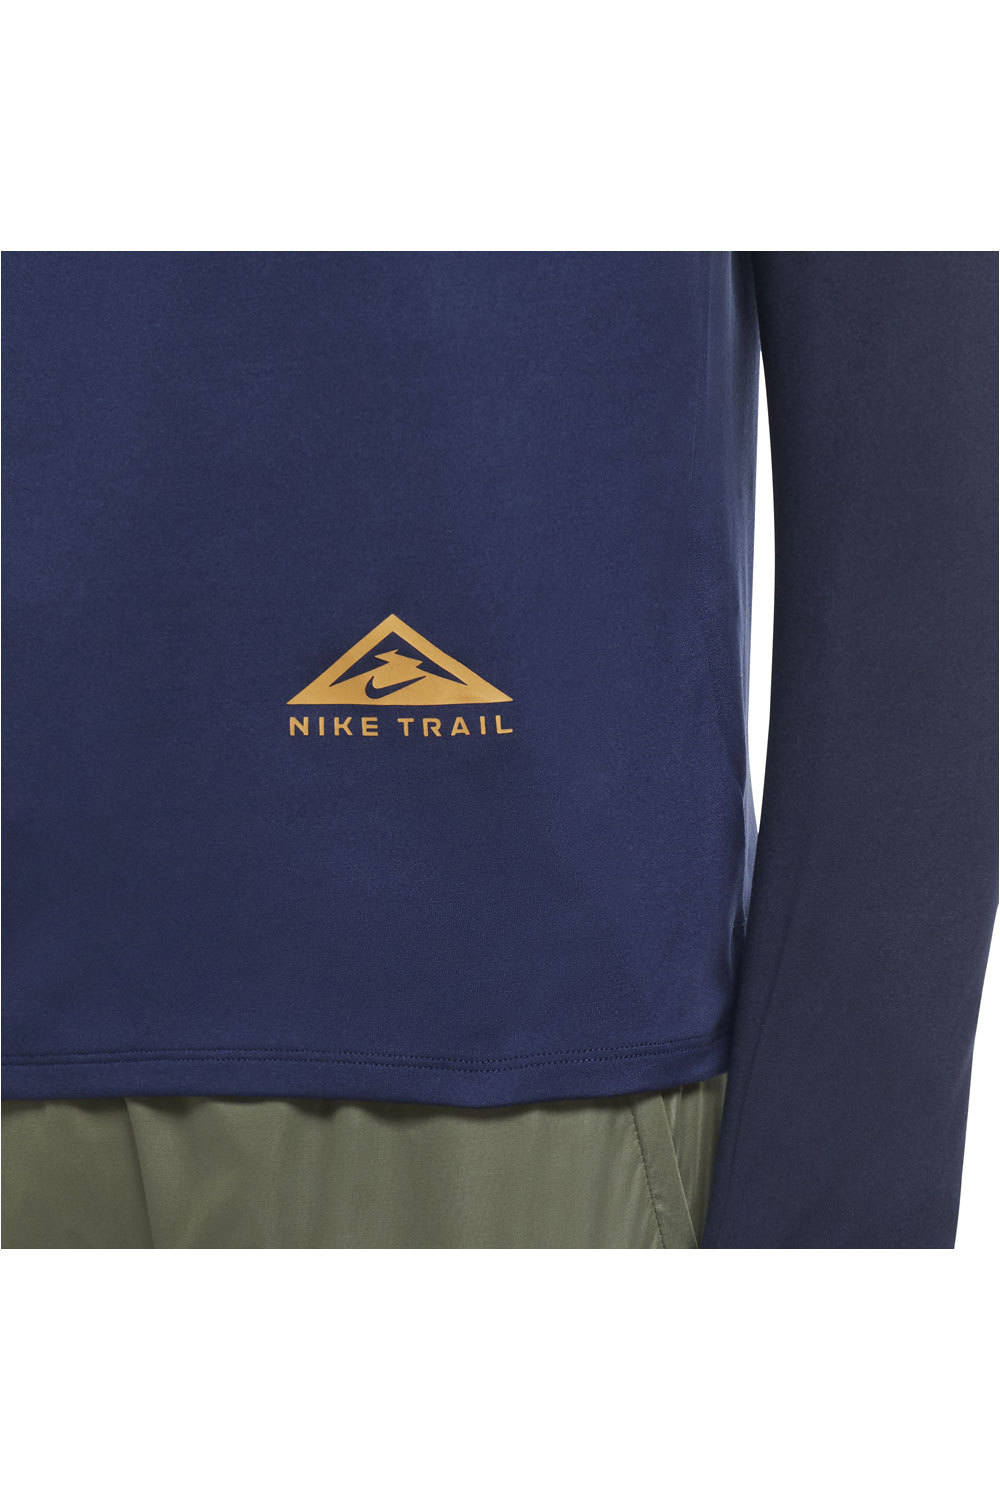 Nike camisetas trail running manga larga hombre M NK DF TRAIL ELMNT TOP HZ vista detalle